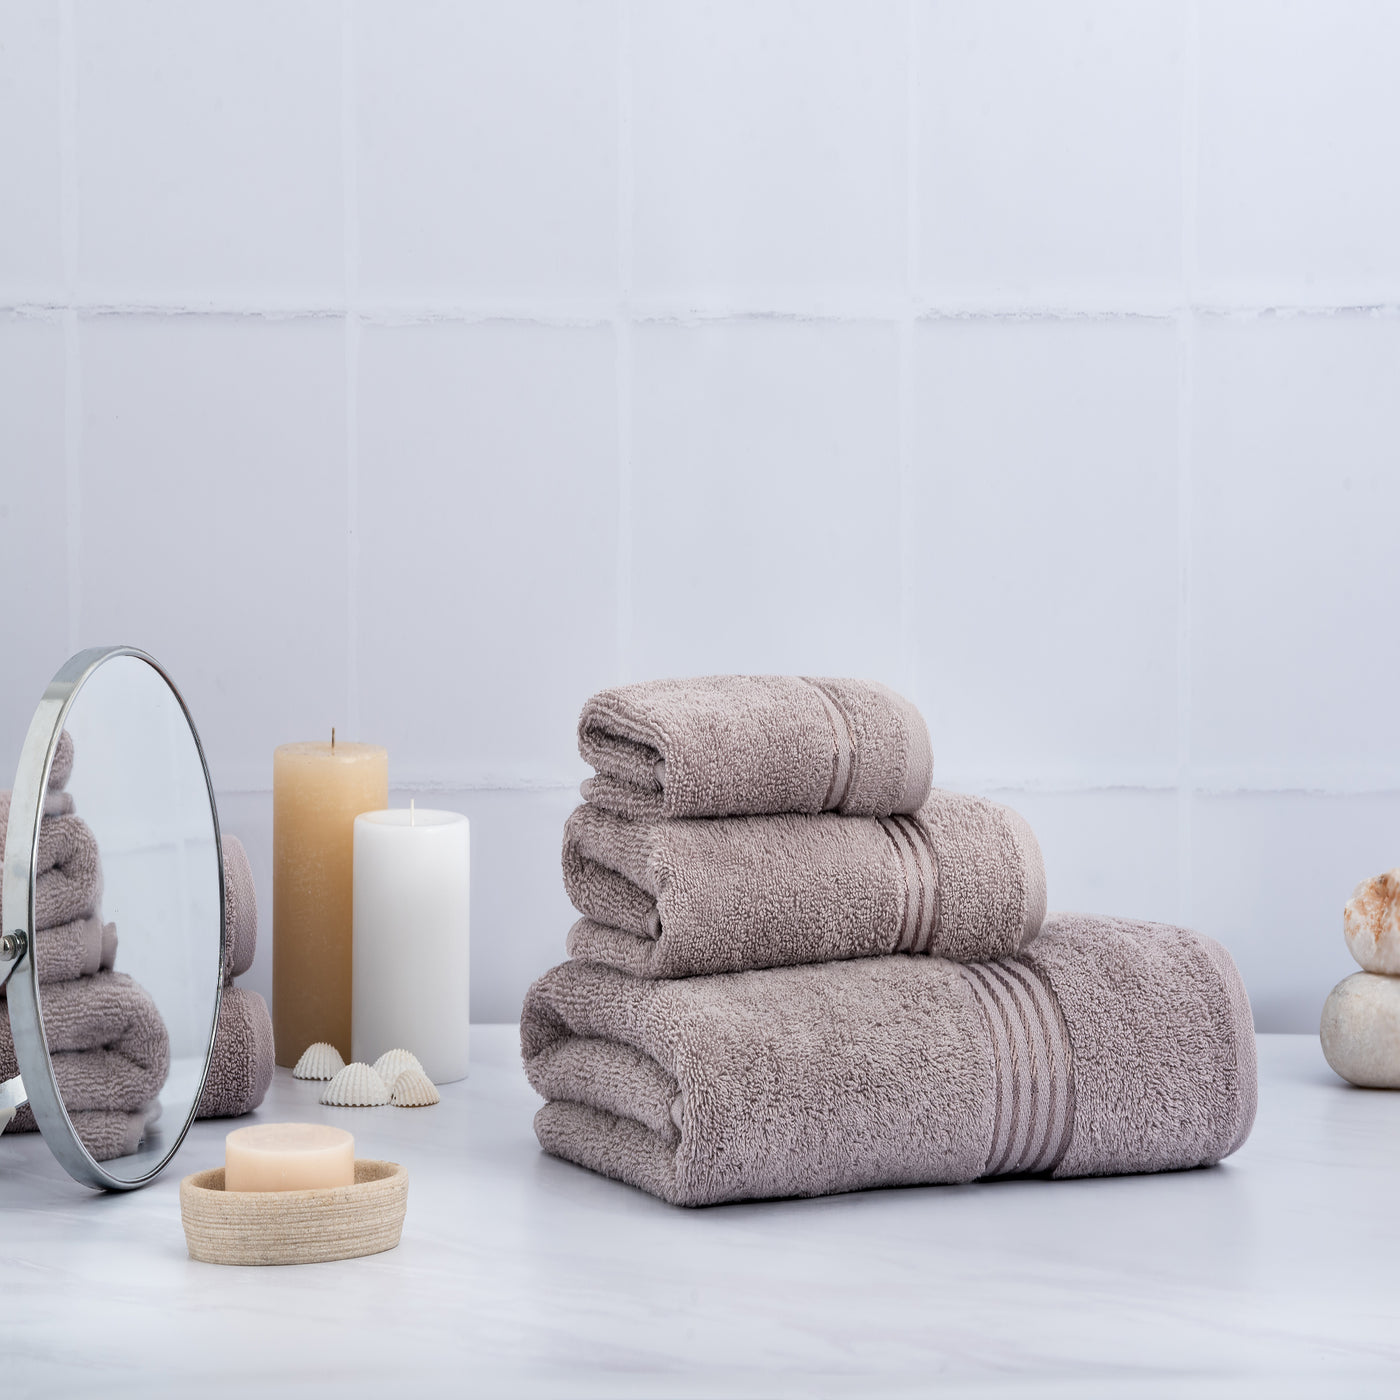 Plush Towel - 6pc Set - 2 x Bath _ 2 x Hand _ 2 x Face _ Silver